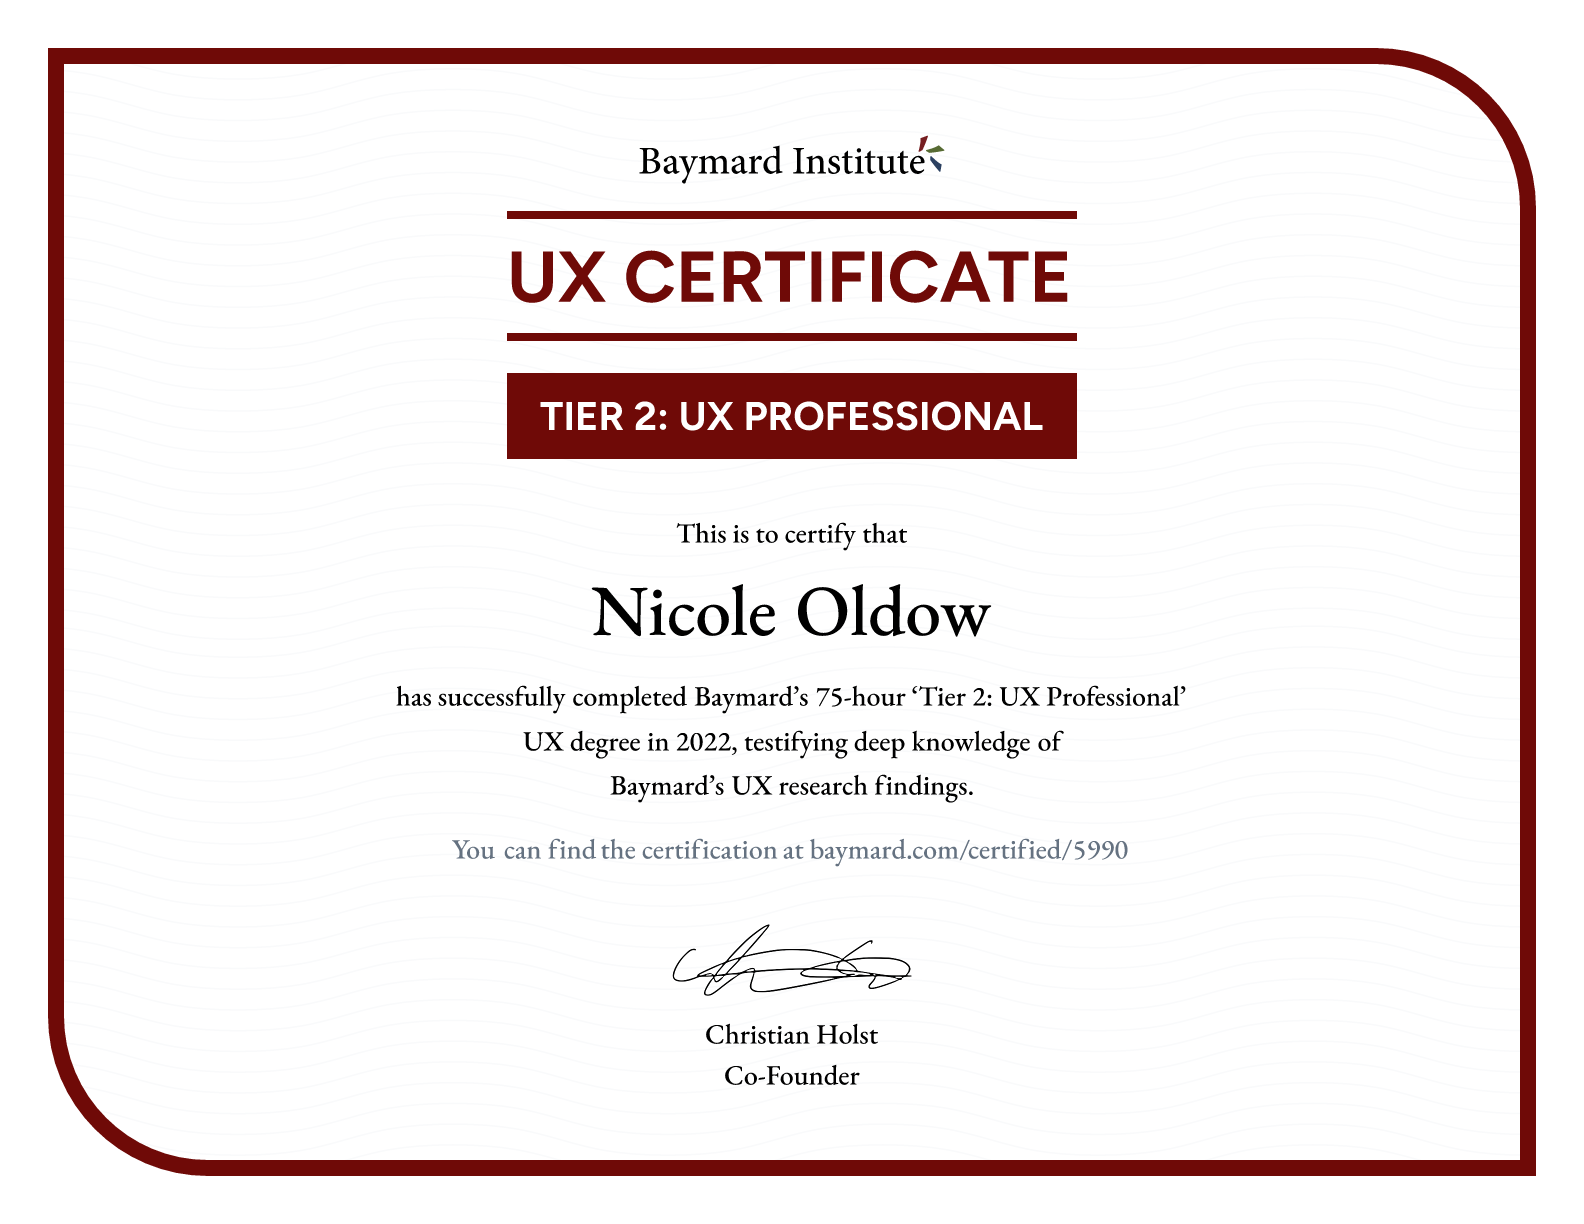 Nicole Oldow’s certificate